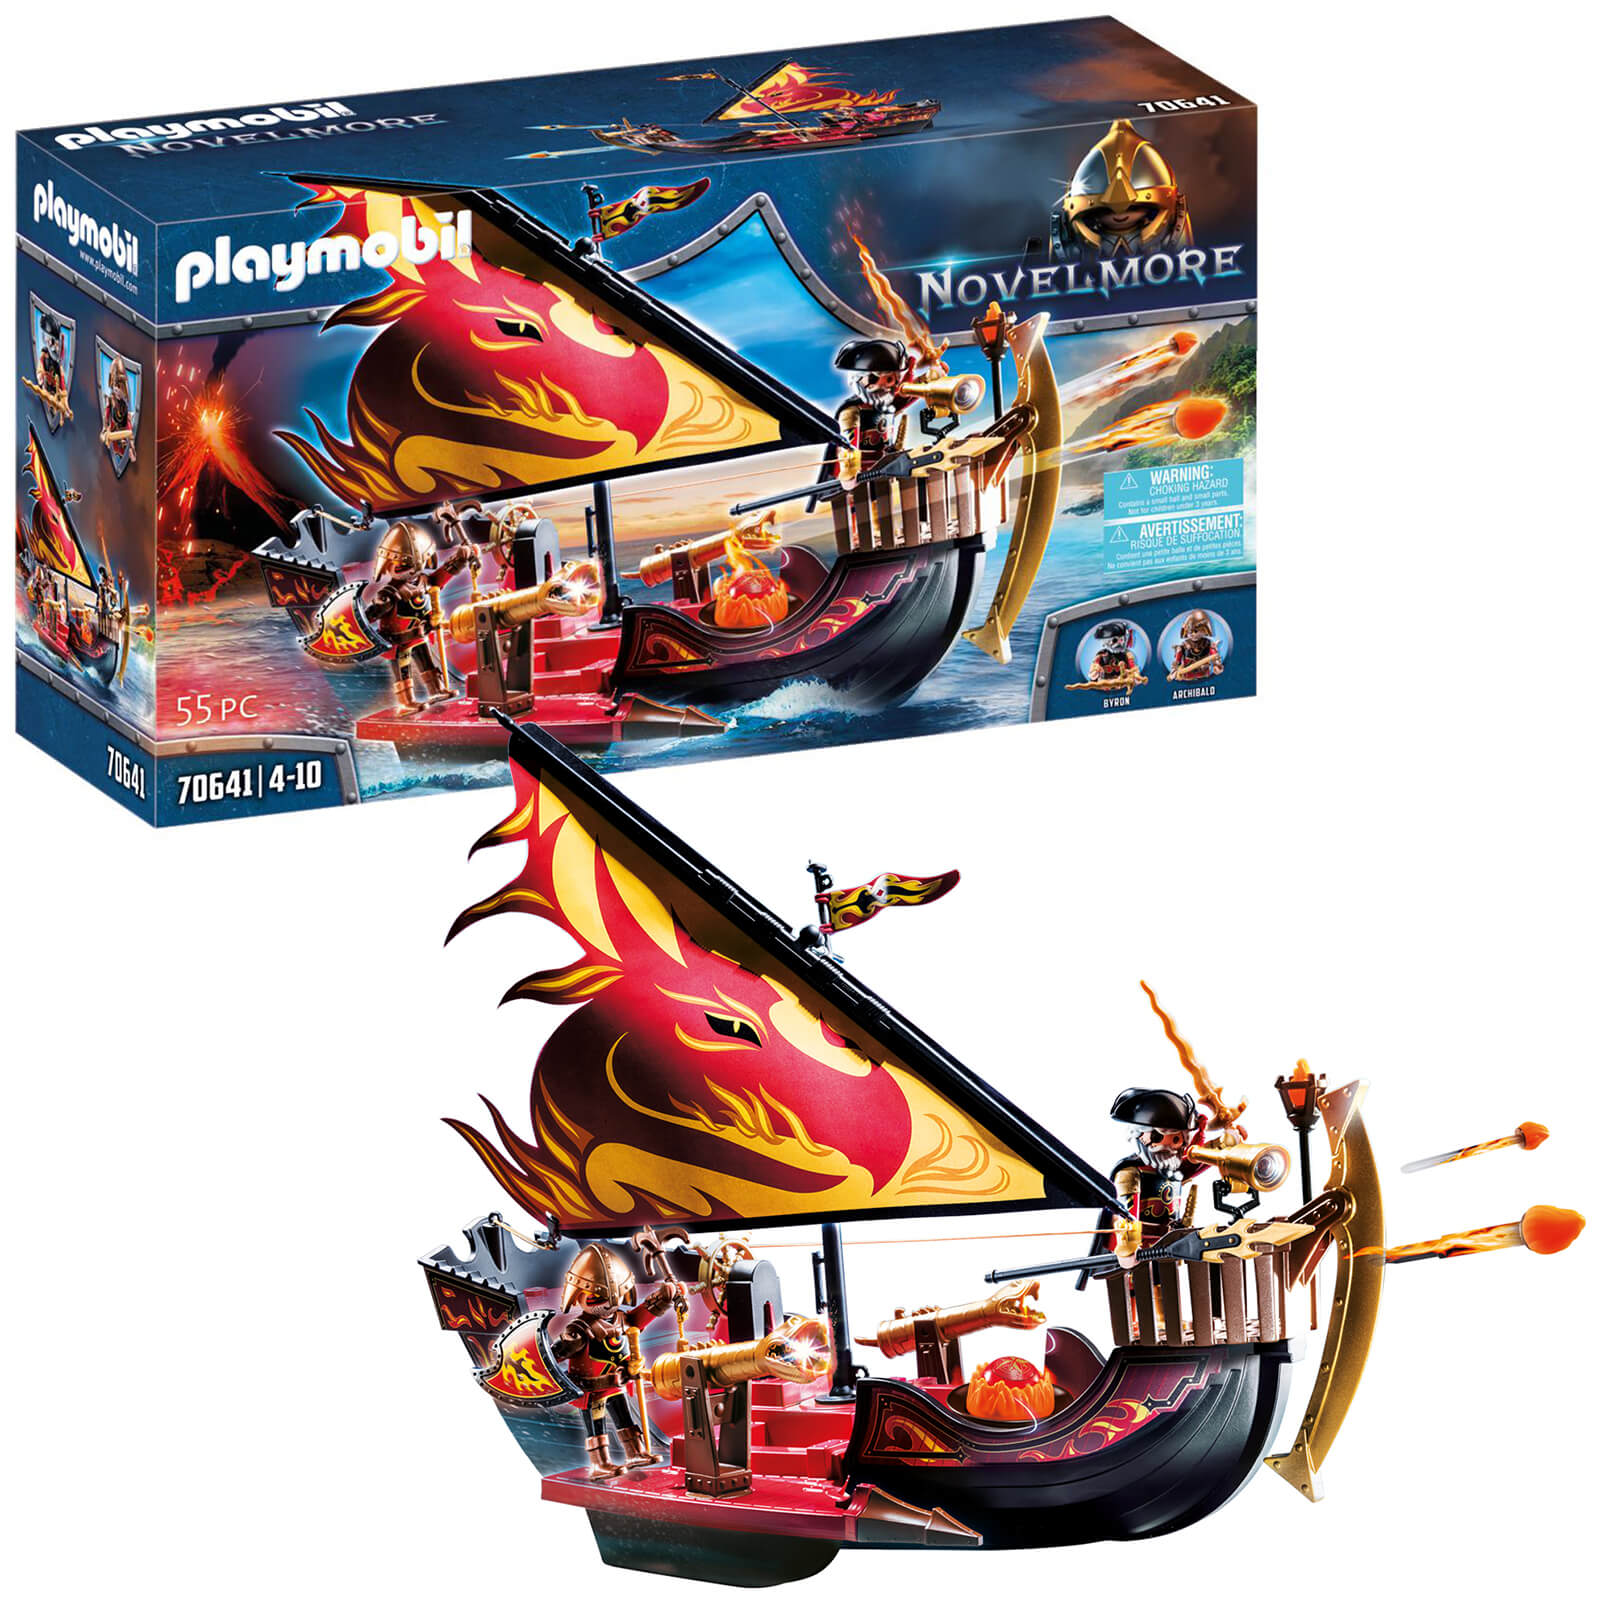 Playmobil Novelmore Knights Burnham Raiders Fire Ship (70641)